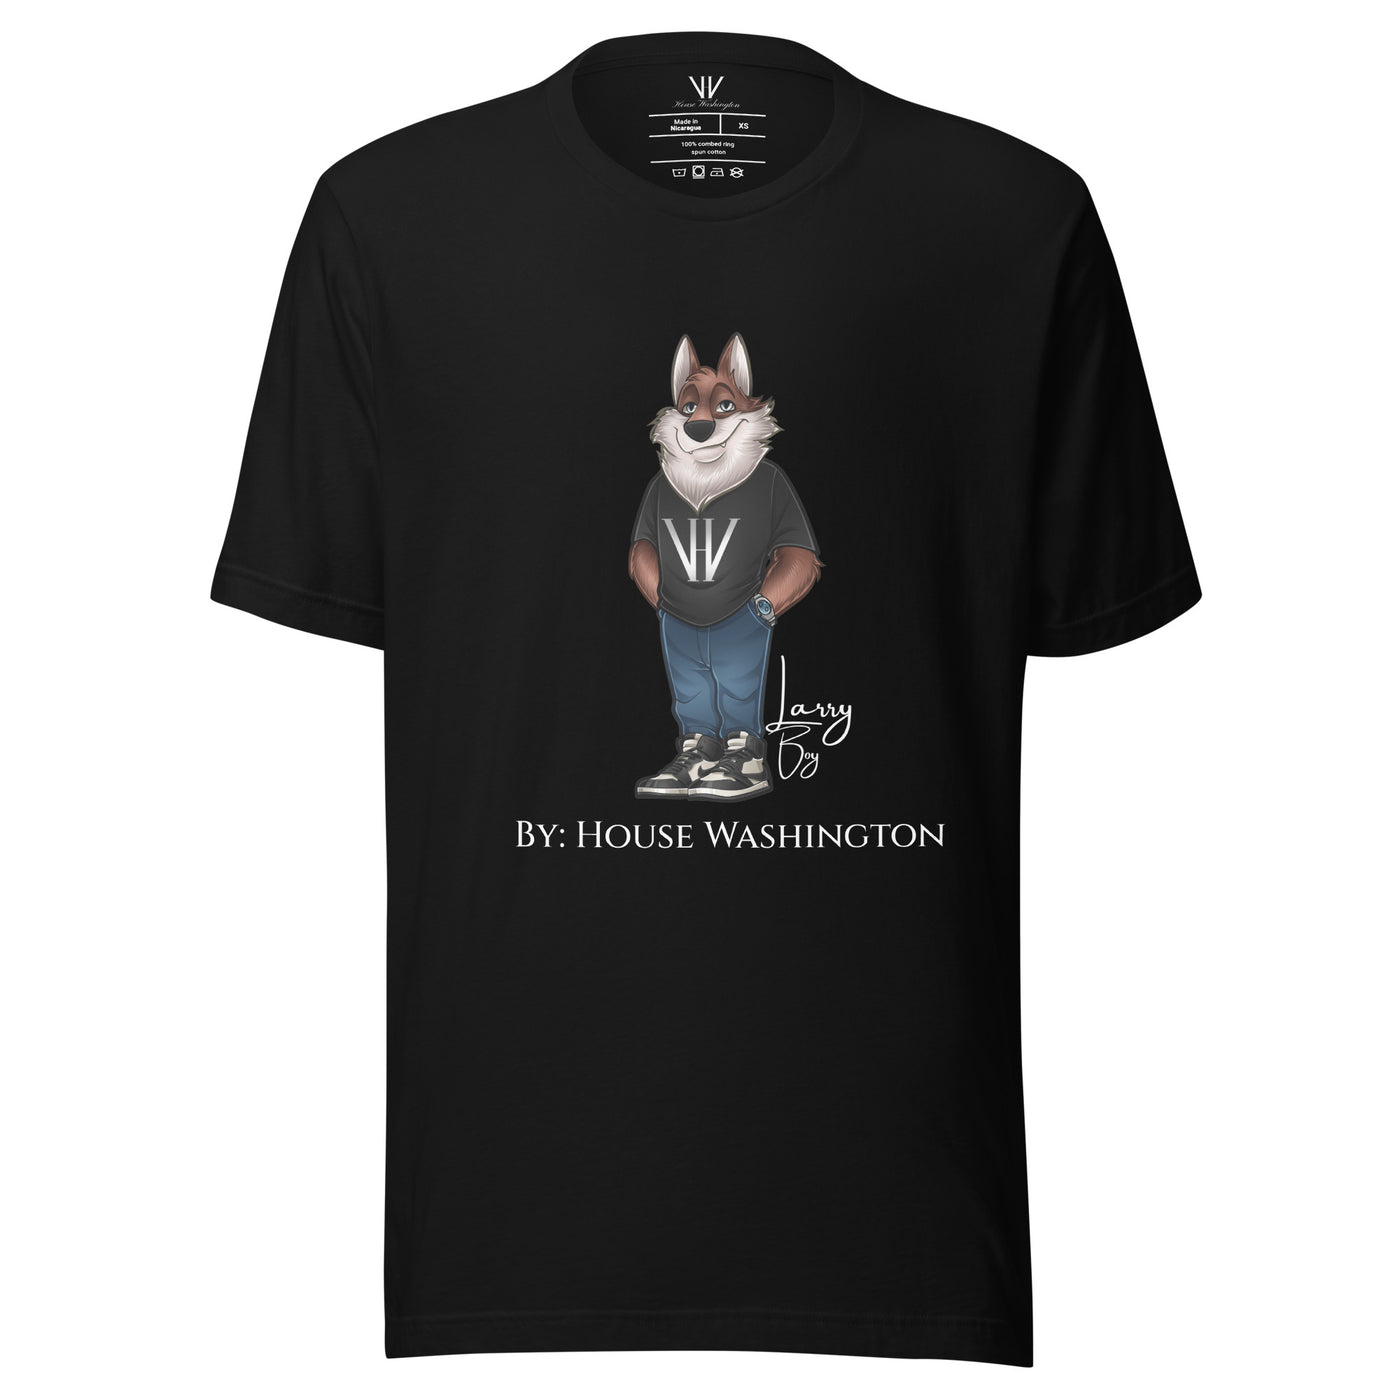 House Washington - "Larry Boy" T-Shirt - Black